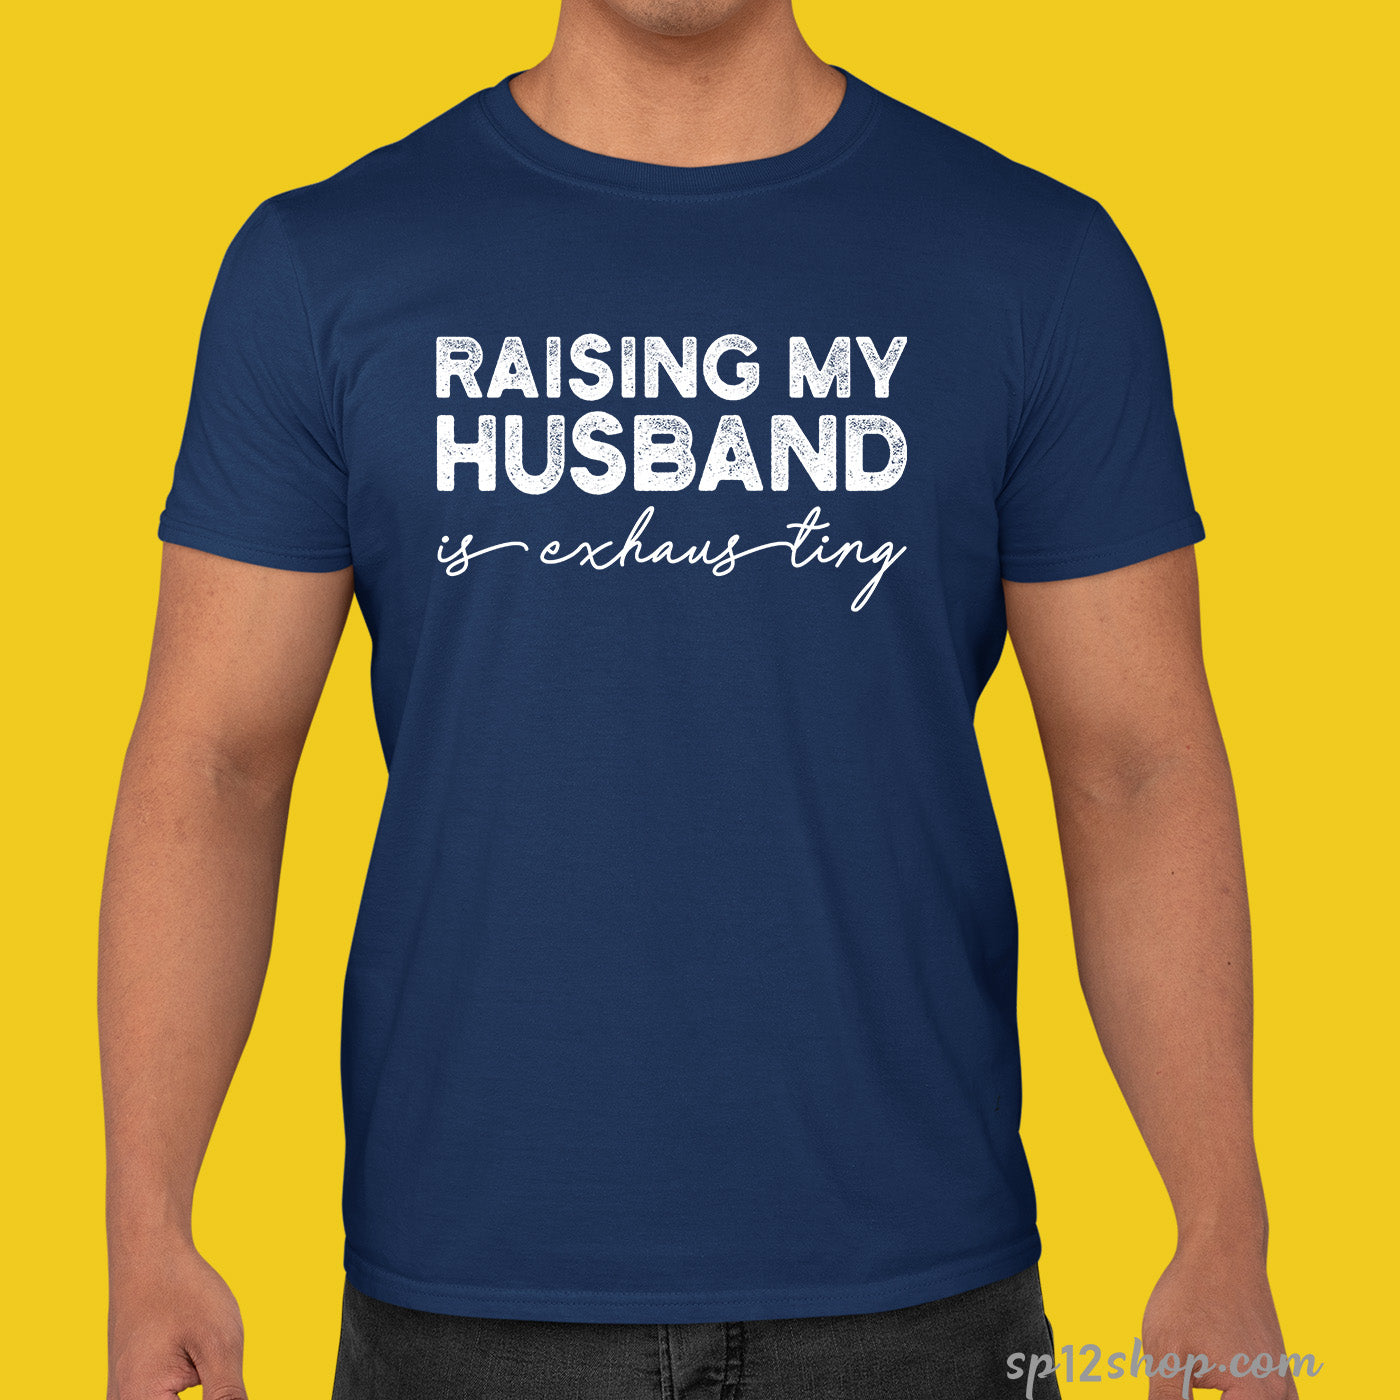 Raising My Husband Is Exhausting T Shirt